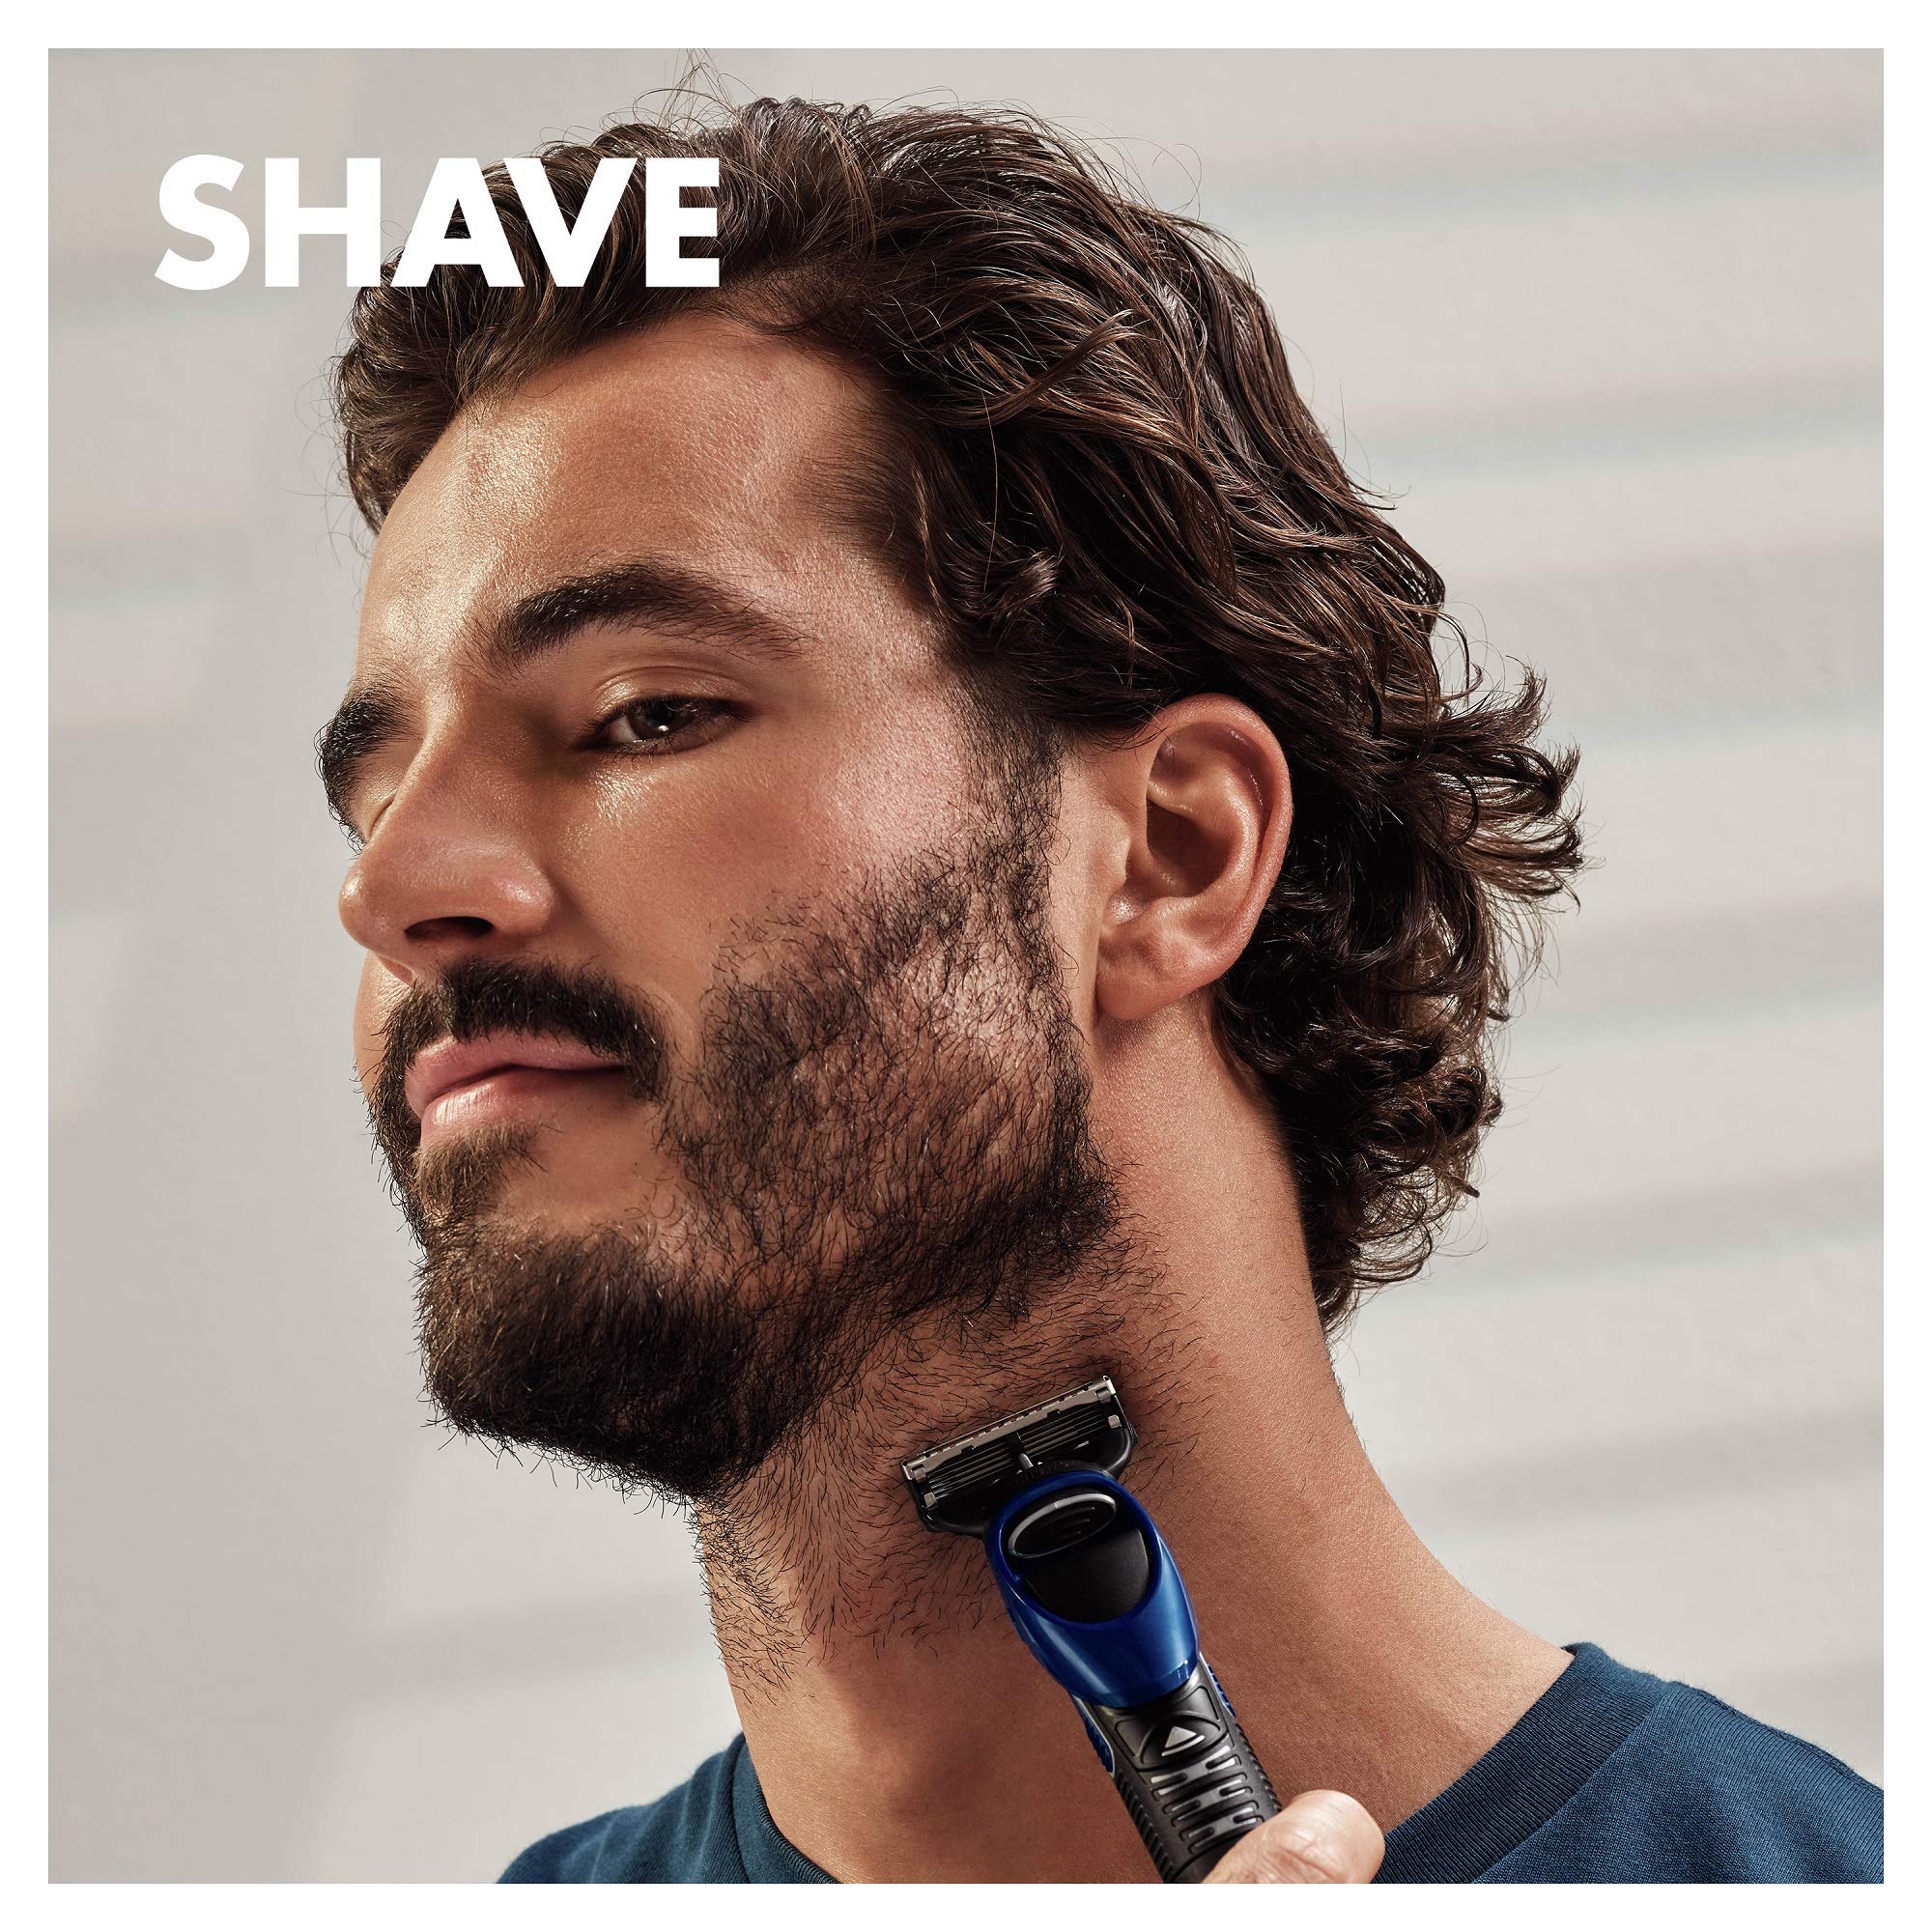 Gillette Styler, 1 Beard Trimmer for Men with 1 ProGlide Razor Blade Refill, 1 Battery, 3 Comb Attachments, Waterproof